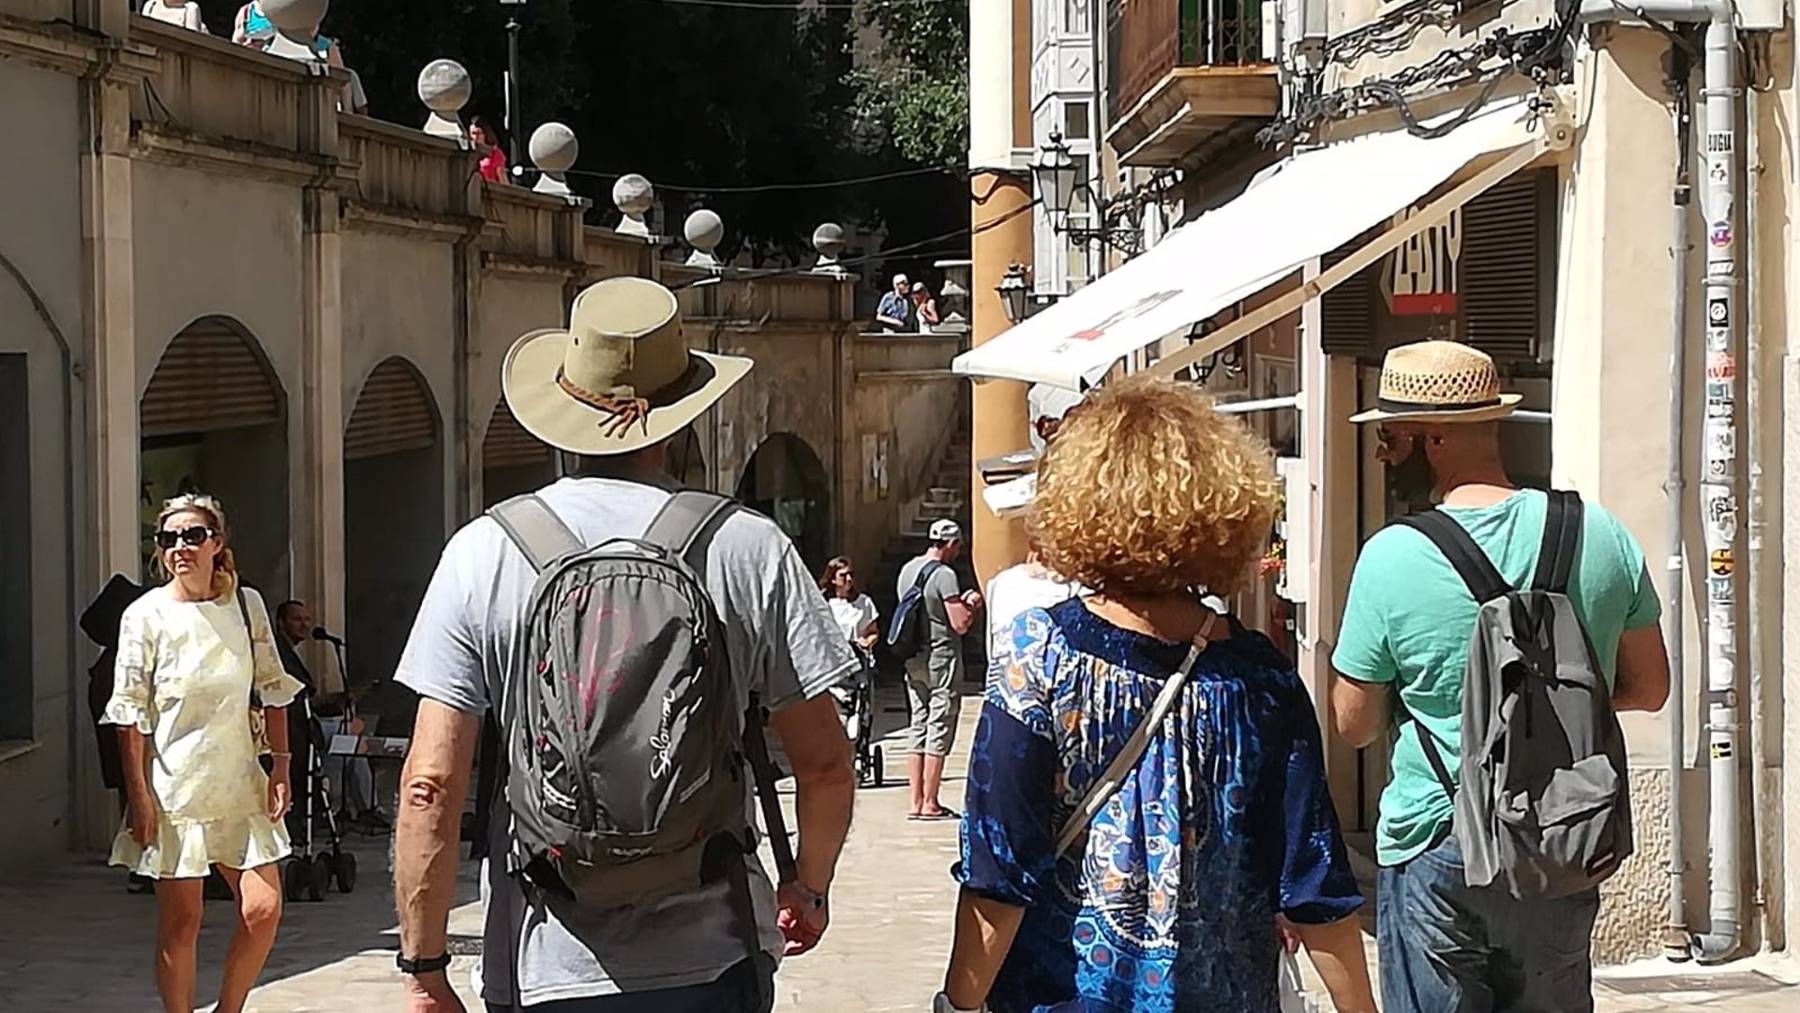 Turistas paseando por el centro de Palma. (Europa Press).